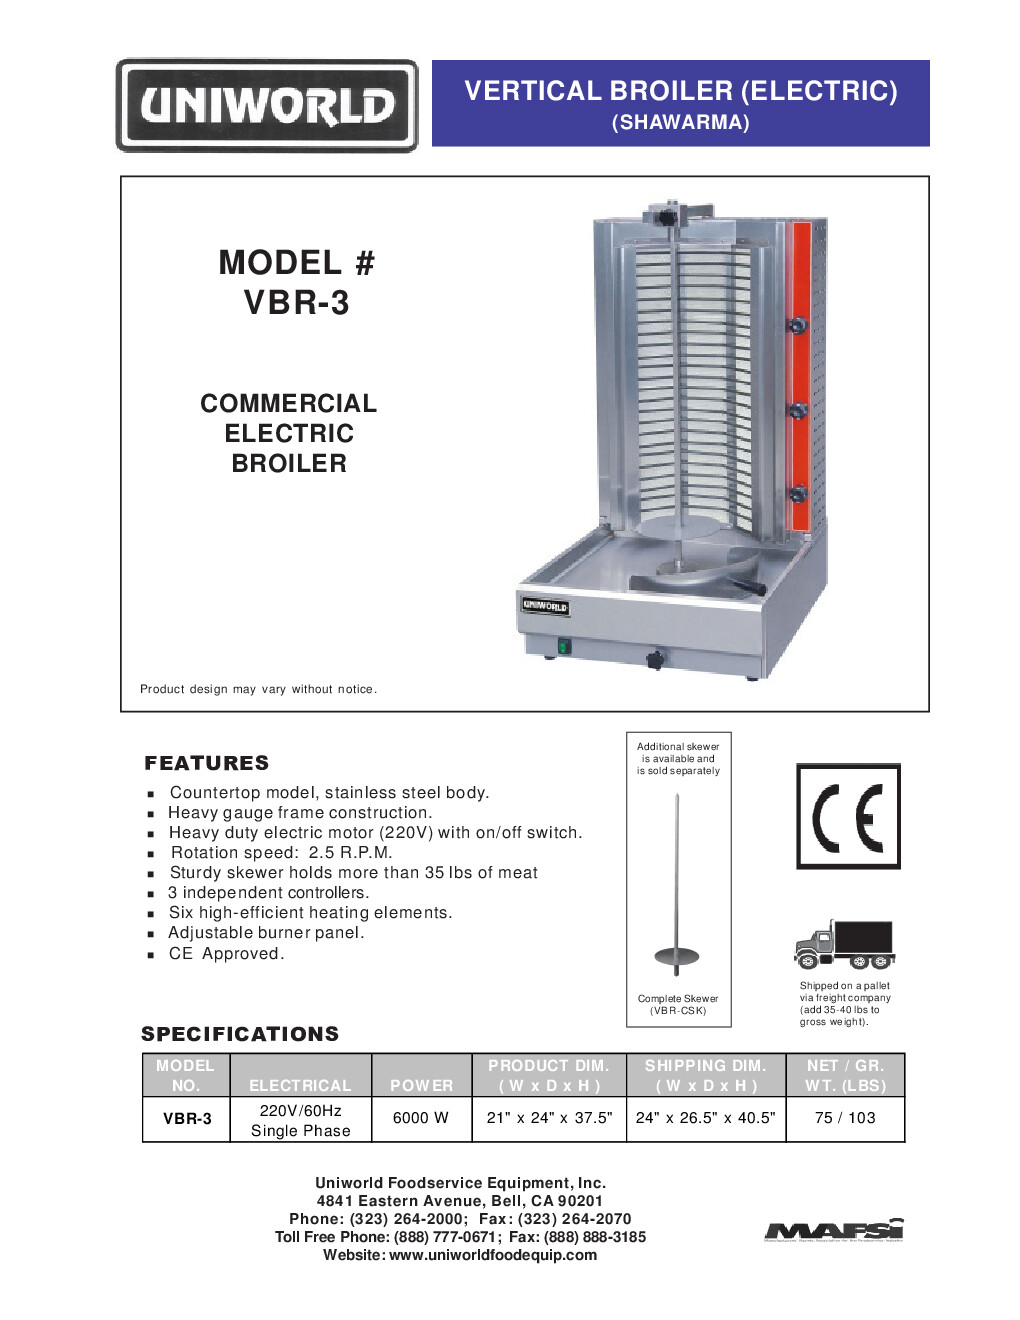 Uniworld VBR-3 Electric Vertical Broiler (Gyro)